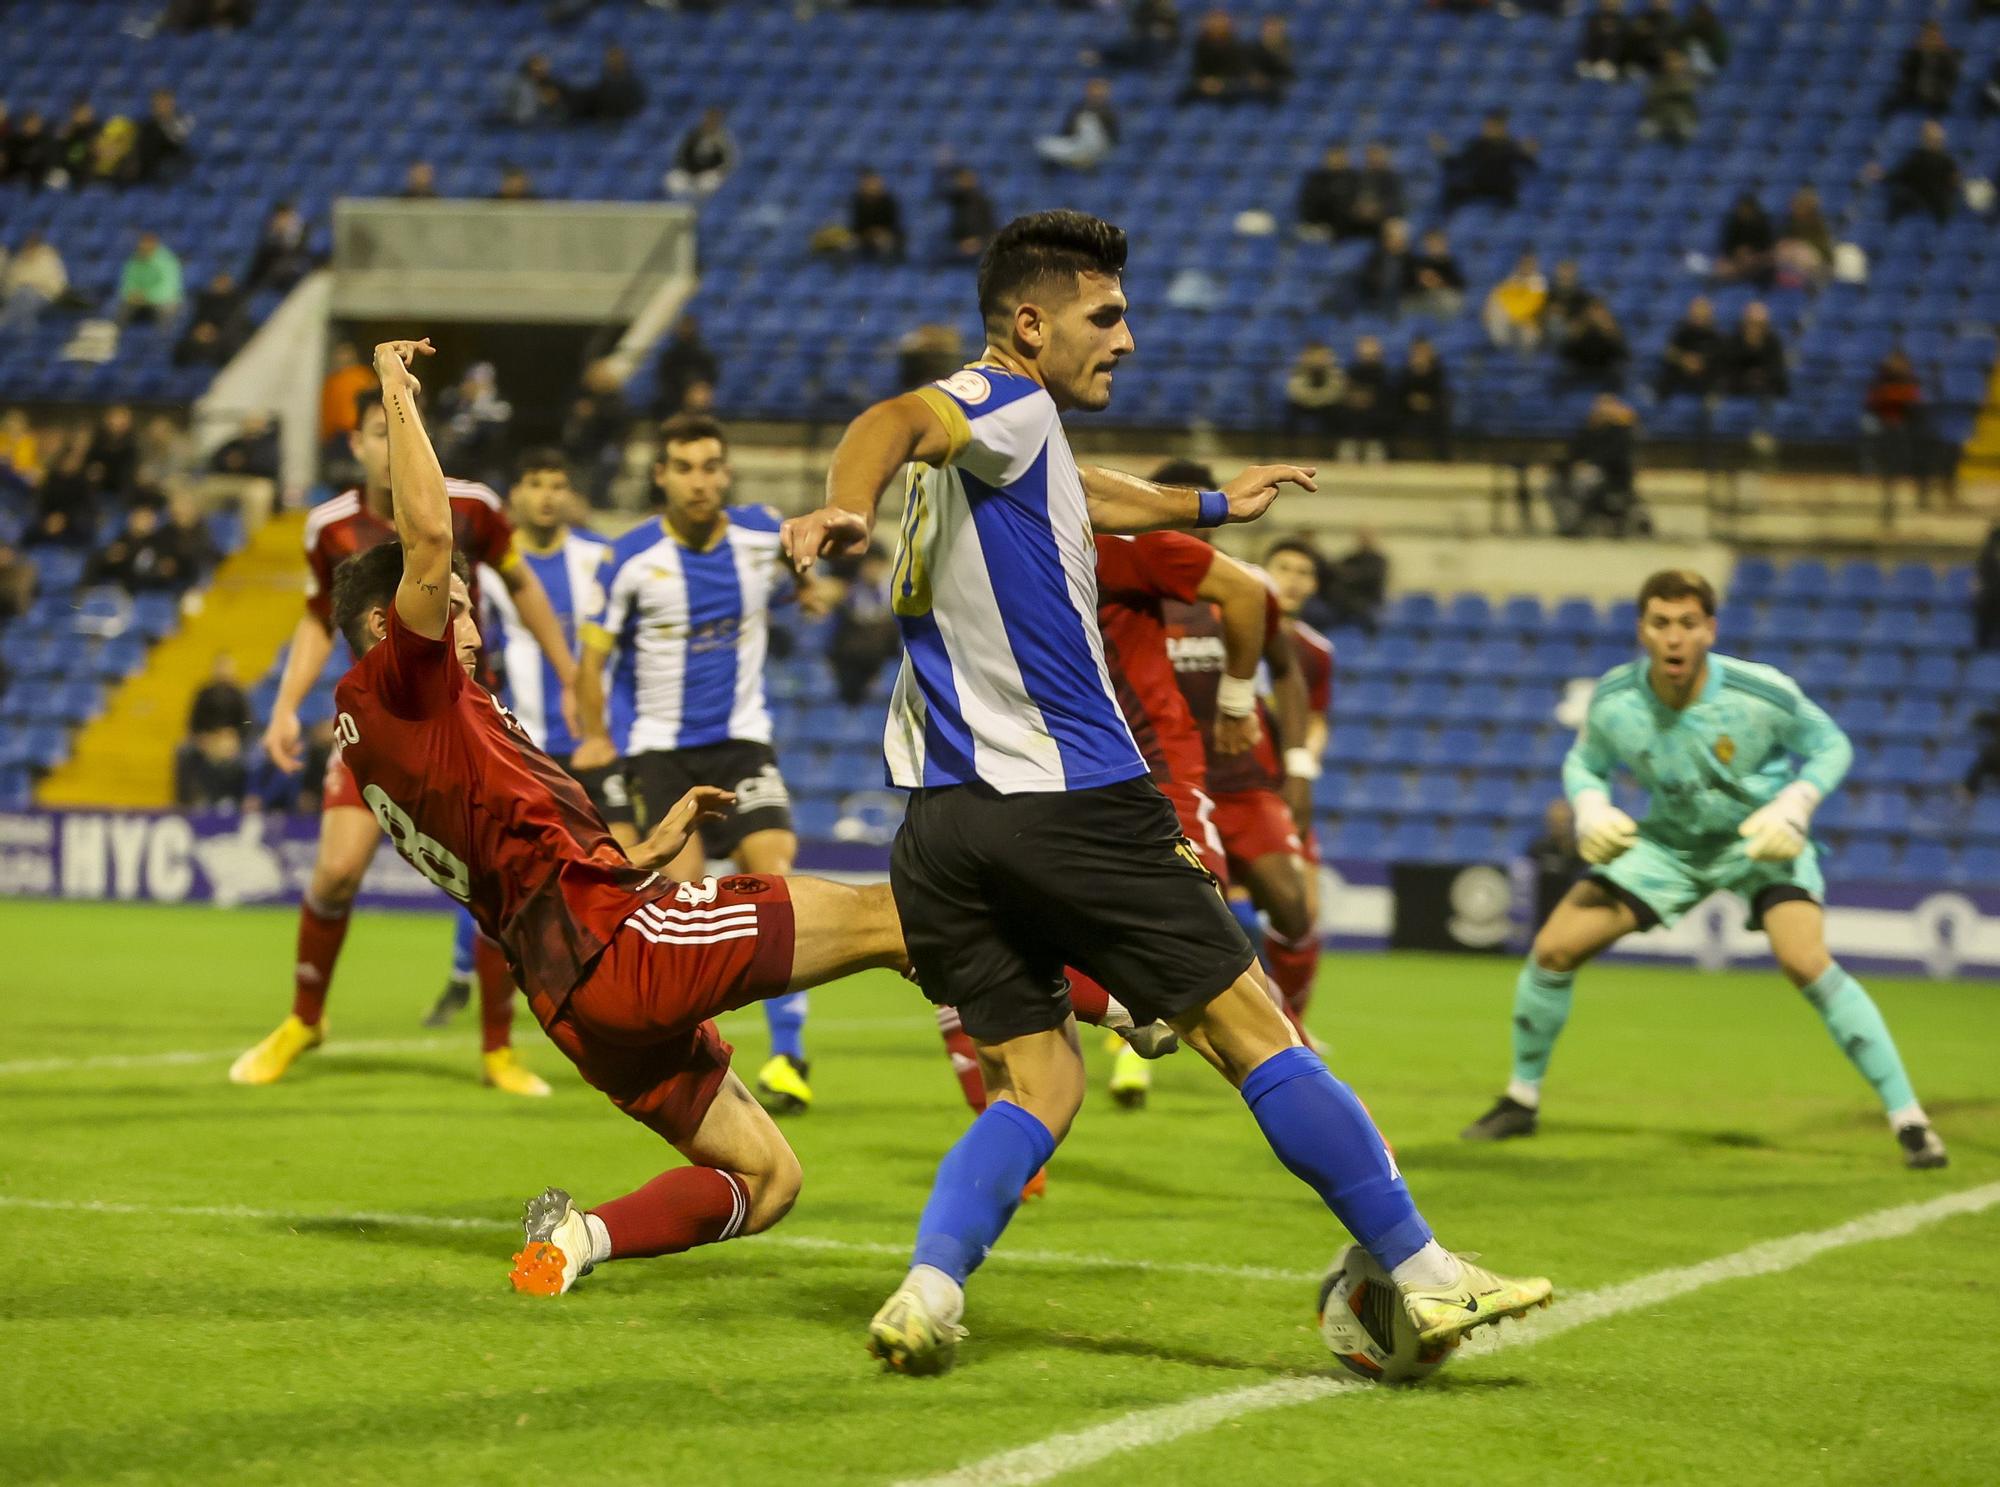 Hércules CF - Real Zaragoza B ( 3 - 1 )